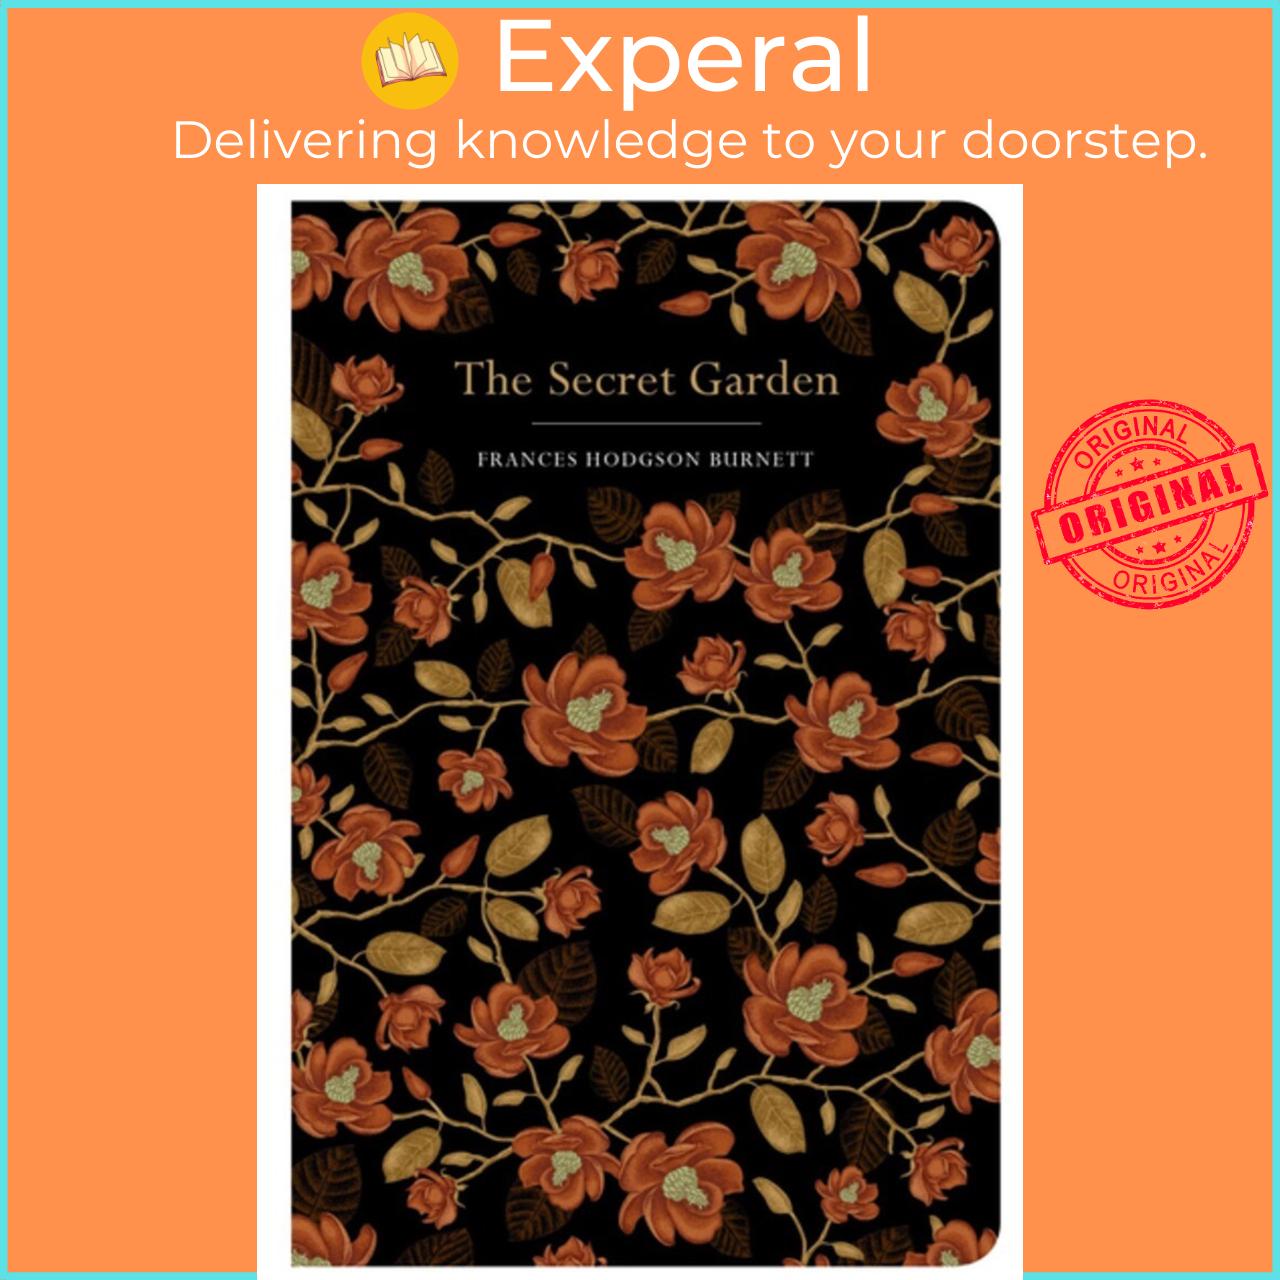 Sách - The Secret Garden by Frances Hodgson Burnett (US edition, Hardcover Paper over boards)